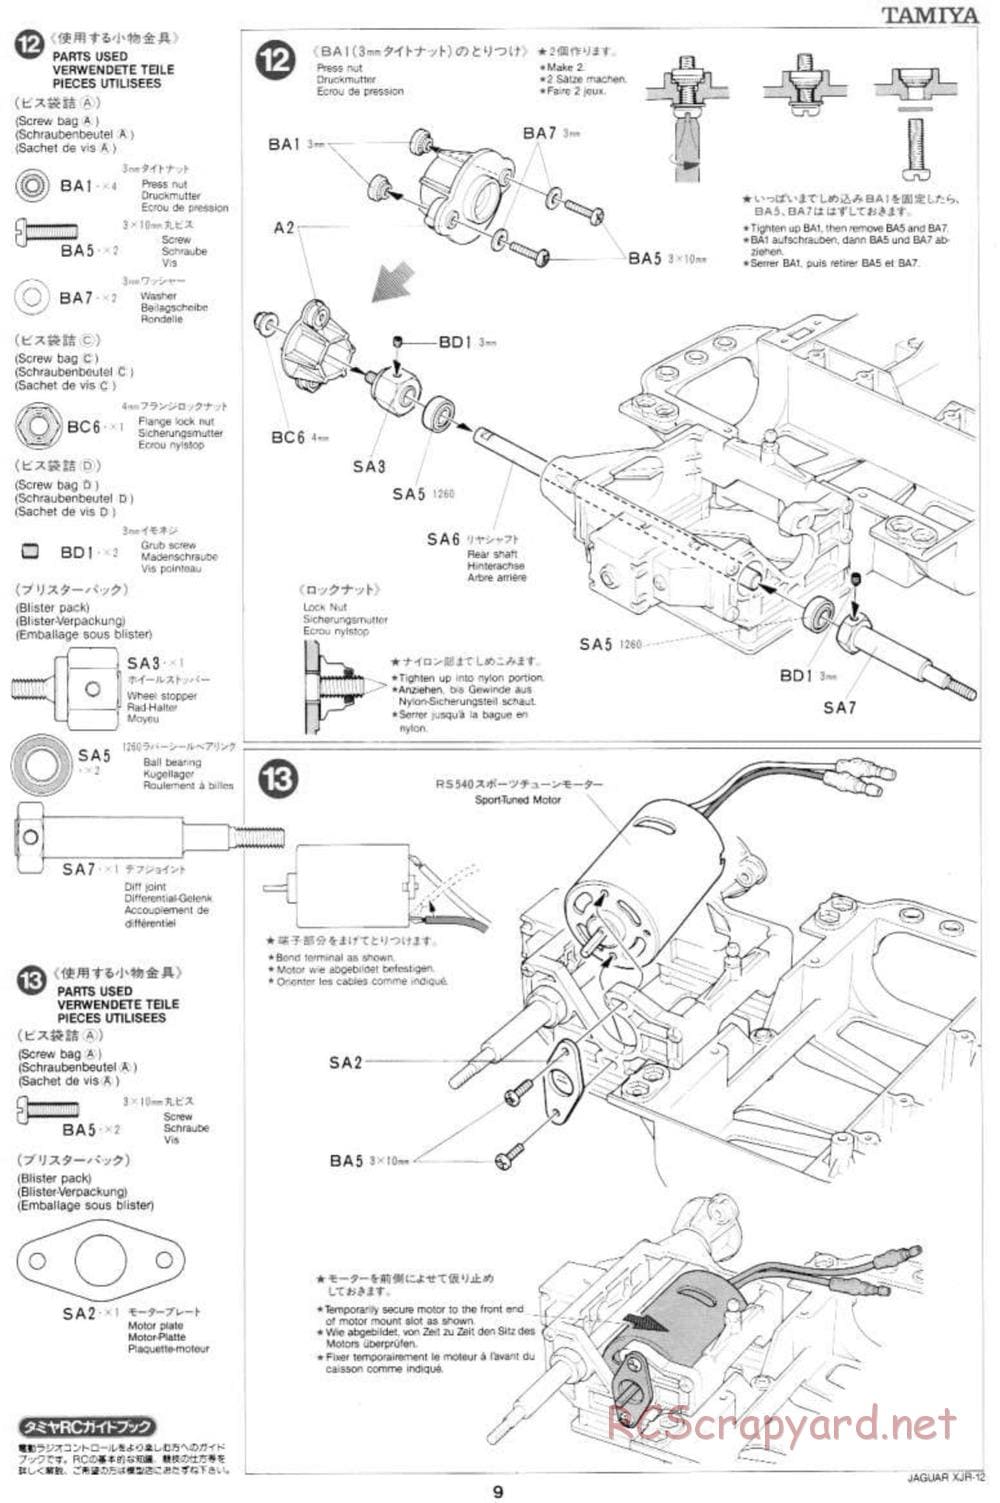 Tamiya - Jaguar XJR-12 Daytona Winner - Group-C Chassis - Manual - Page 9